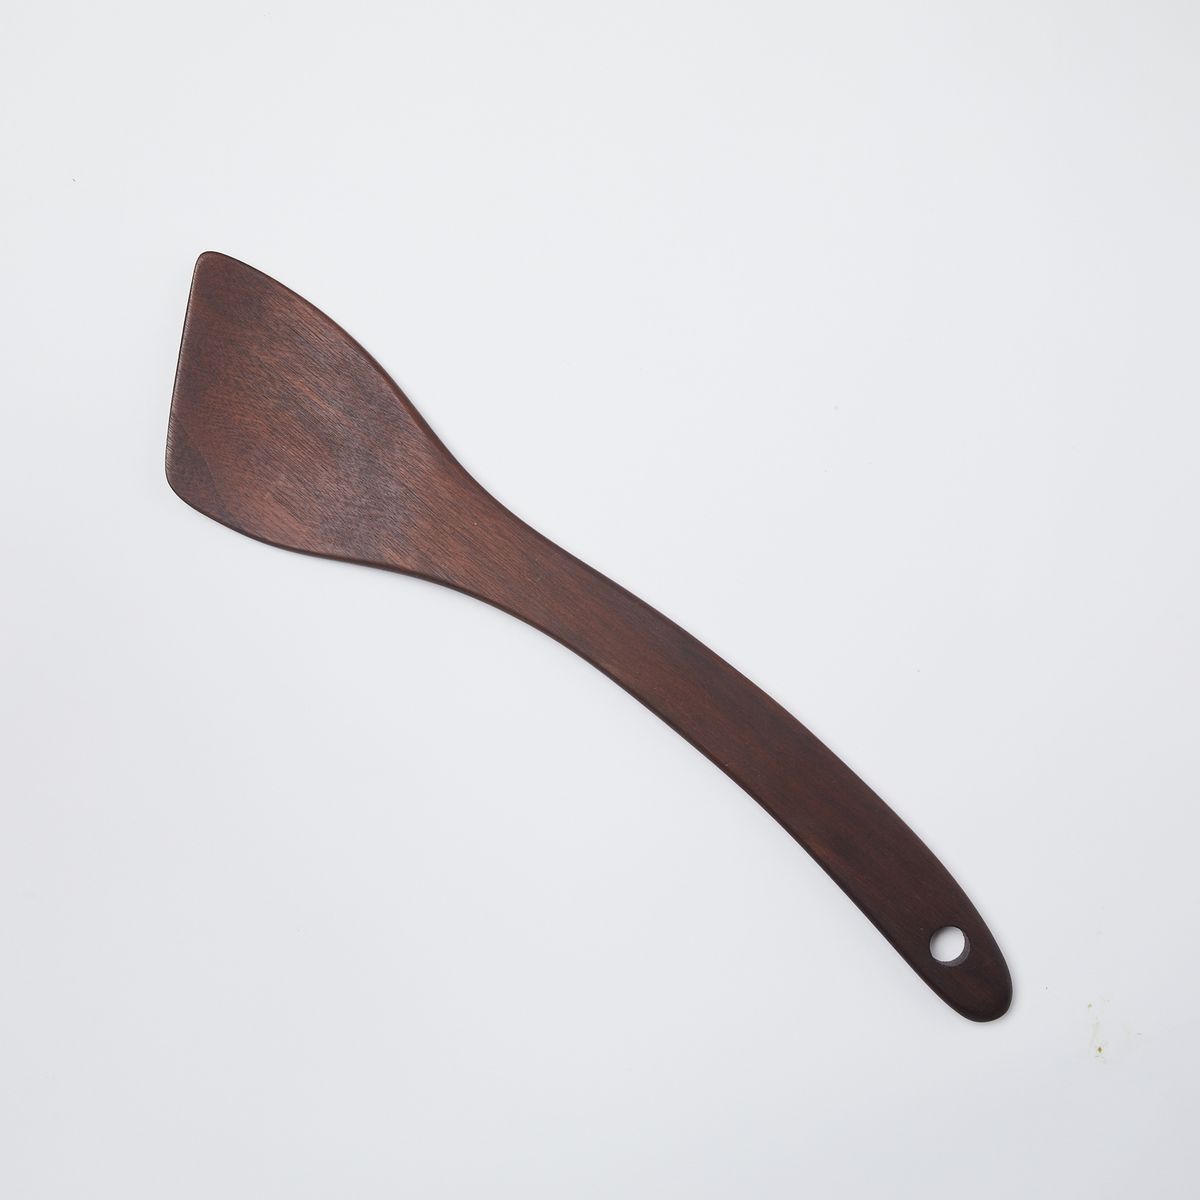 Black walnut wood spatula with a slanted head and a hole at the bottom 